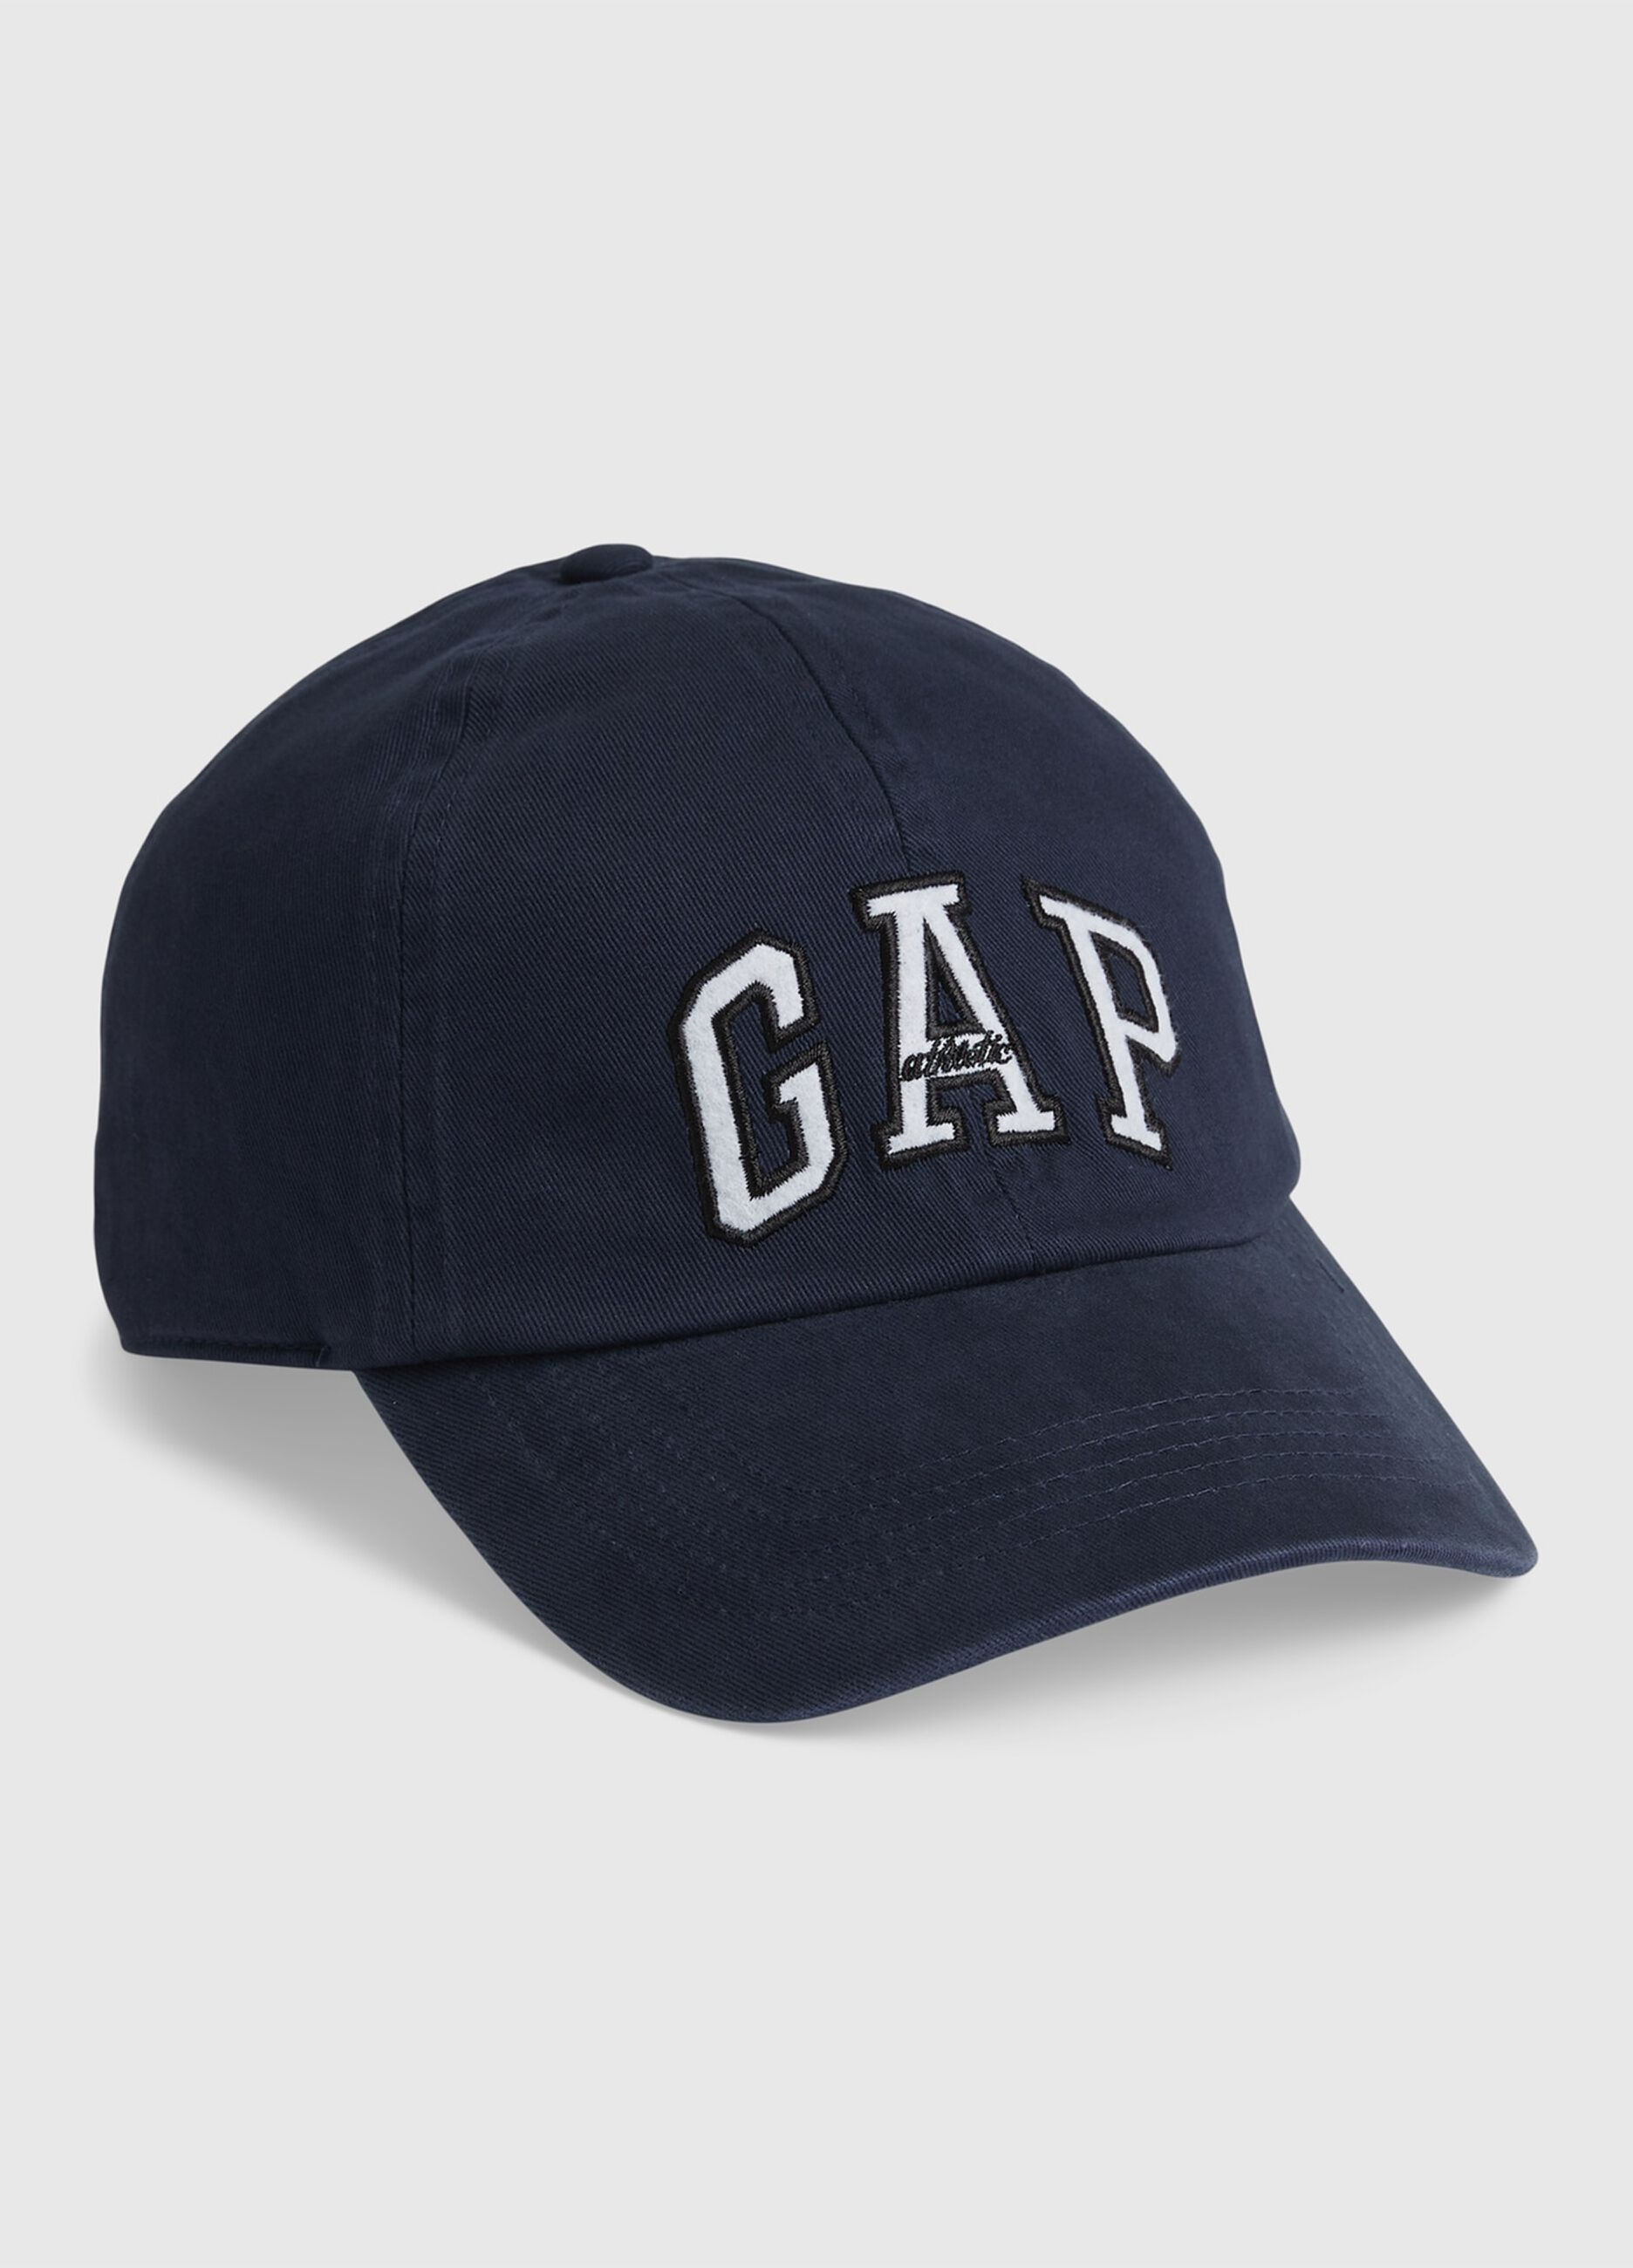 Baseball cap with Athletics logo embroidery